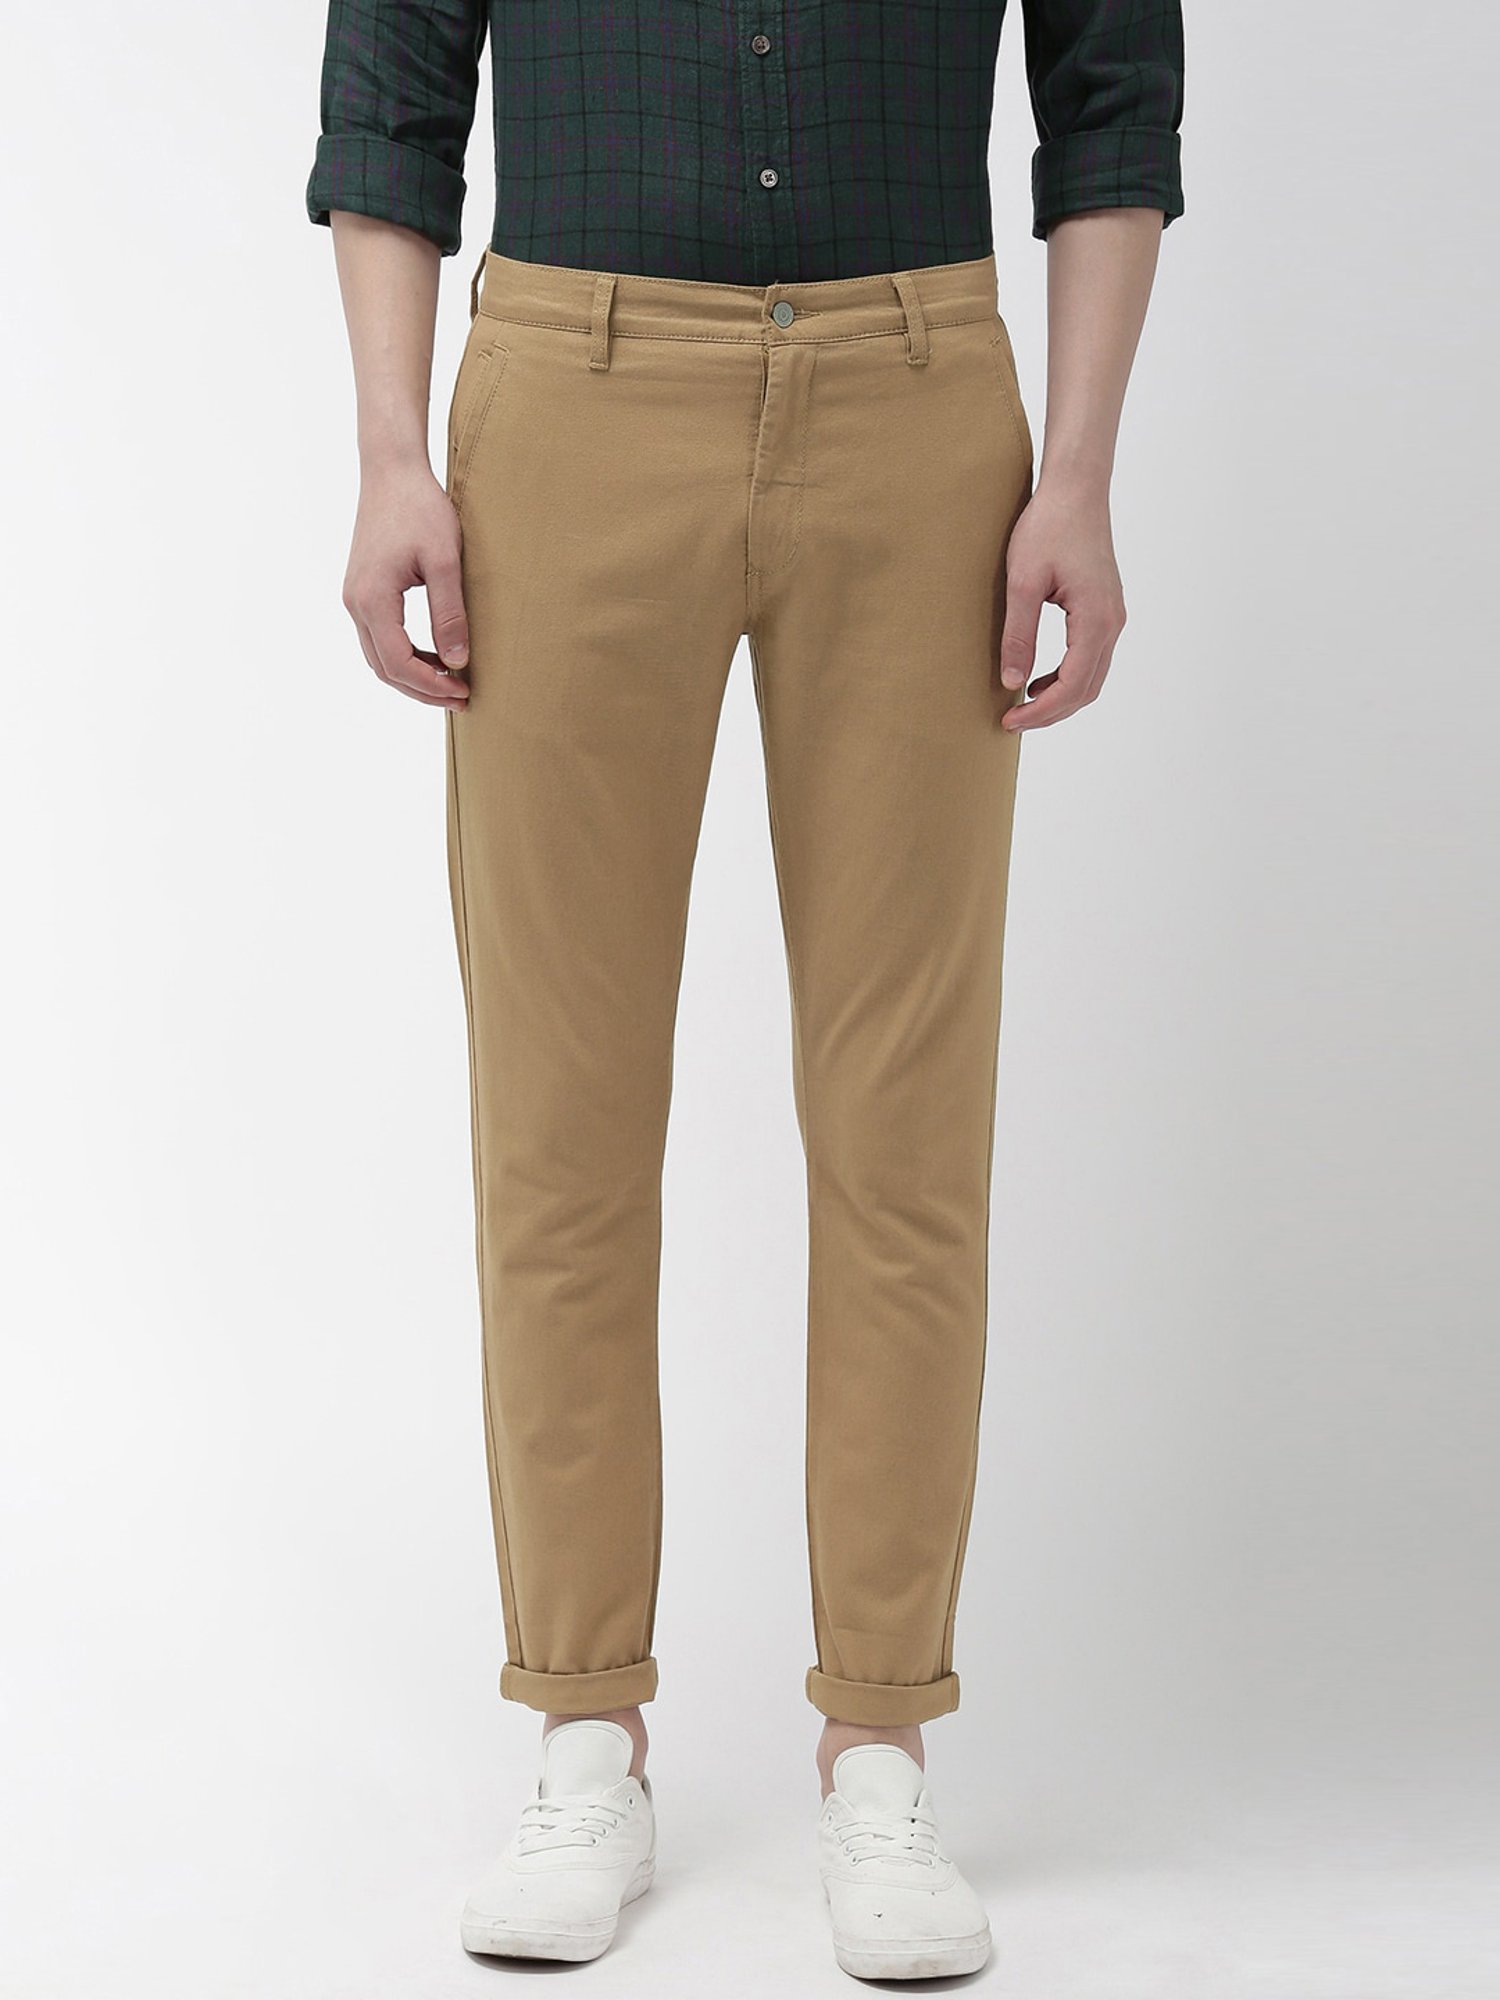 Buy Grey Trousers  Pants for Men by LEVIS Online  Ajiocom